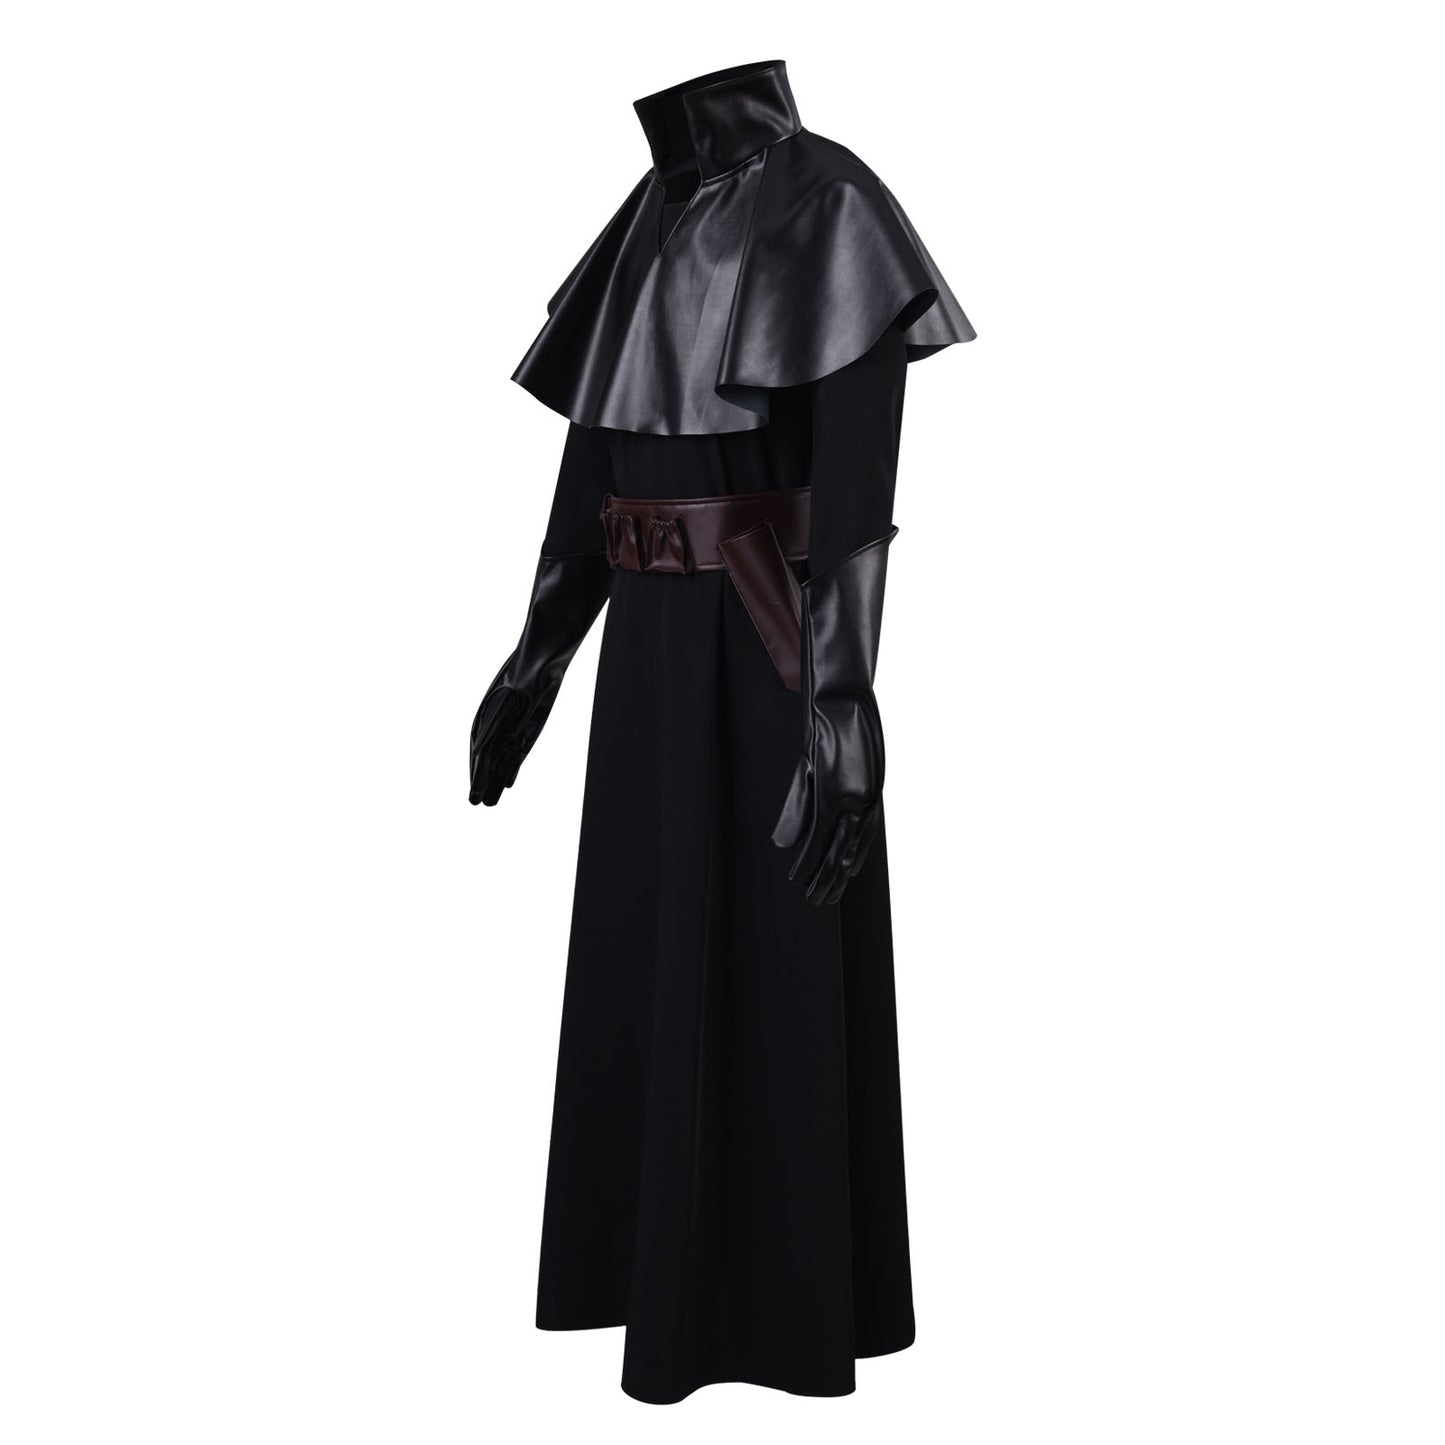 Halloween Medieval Steampunk Wind European Plague Doctor Cosplay Costume Priest Renaissance Cloak Cape